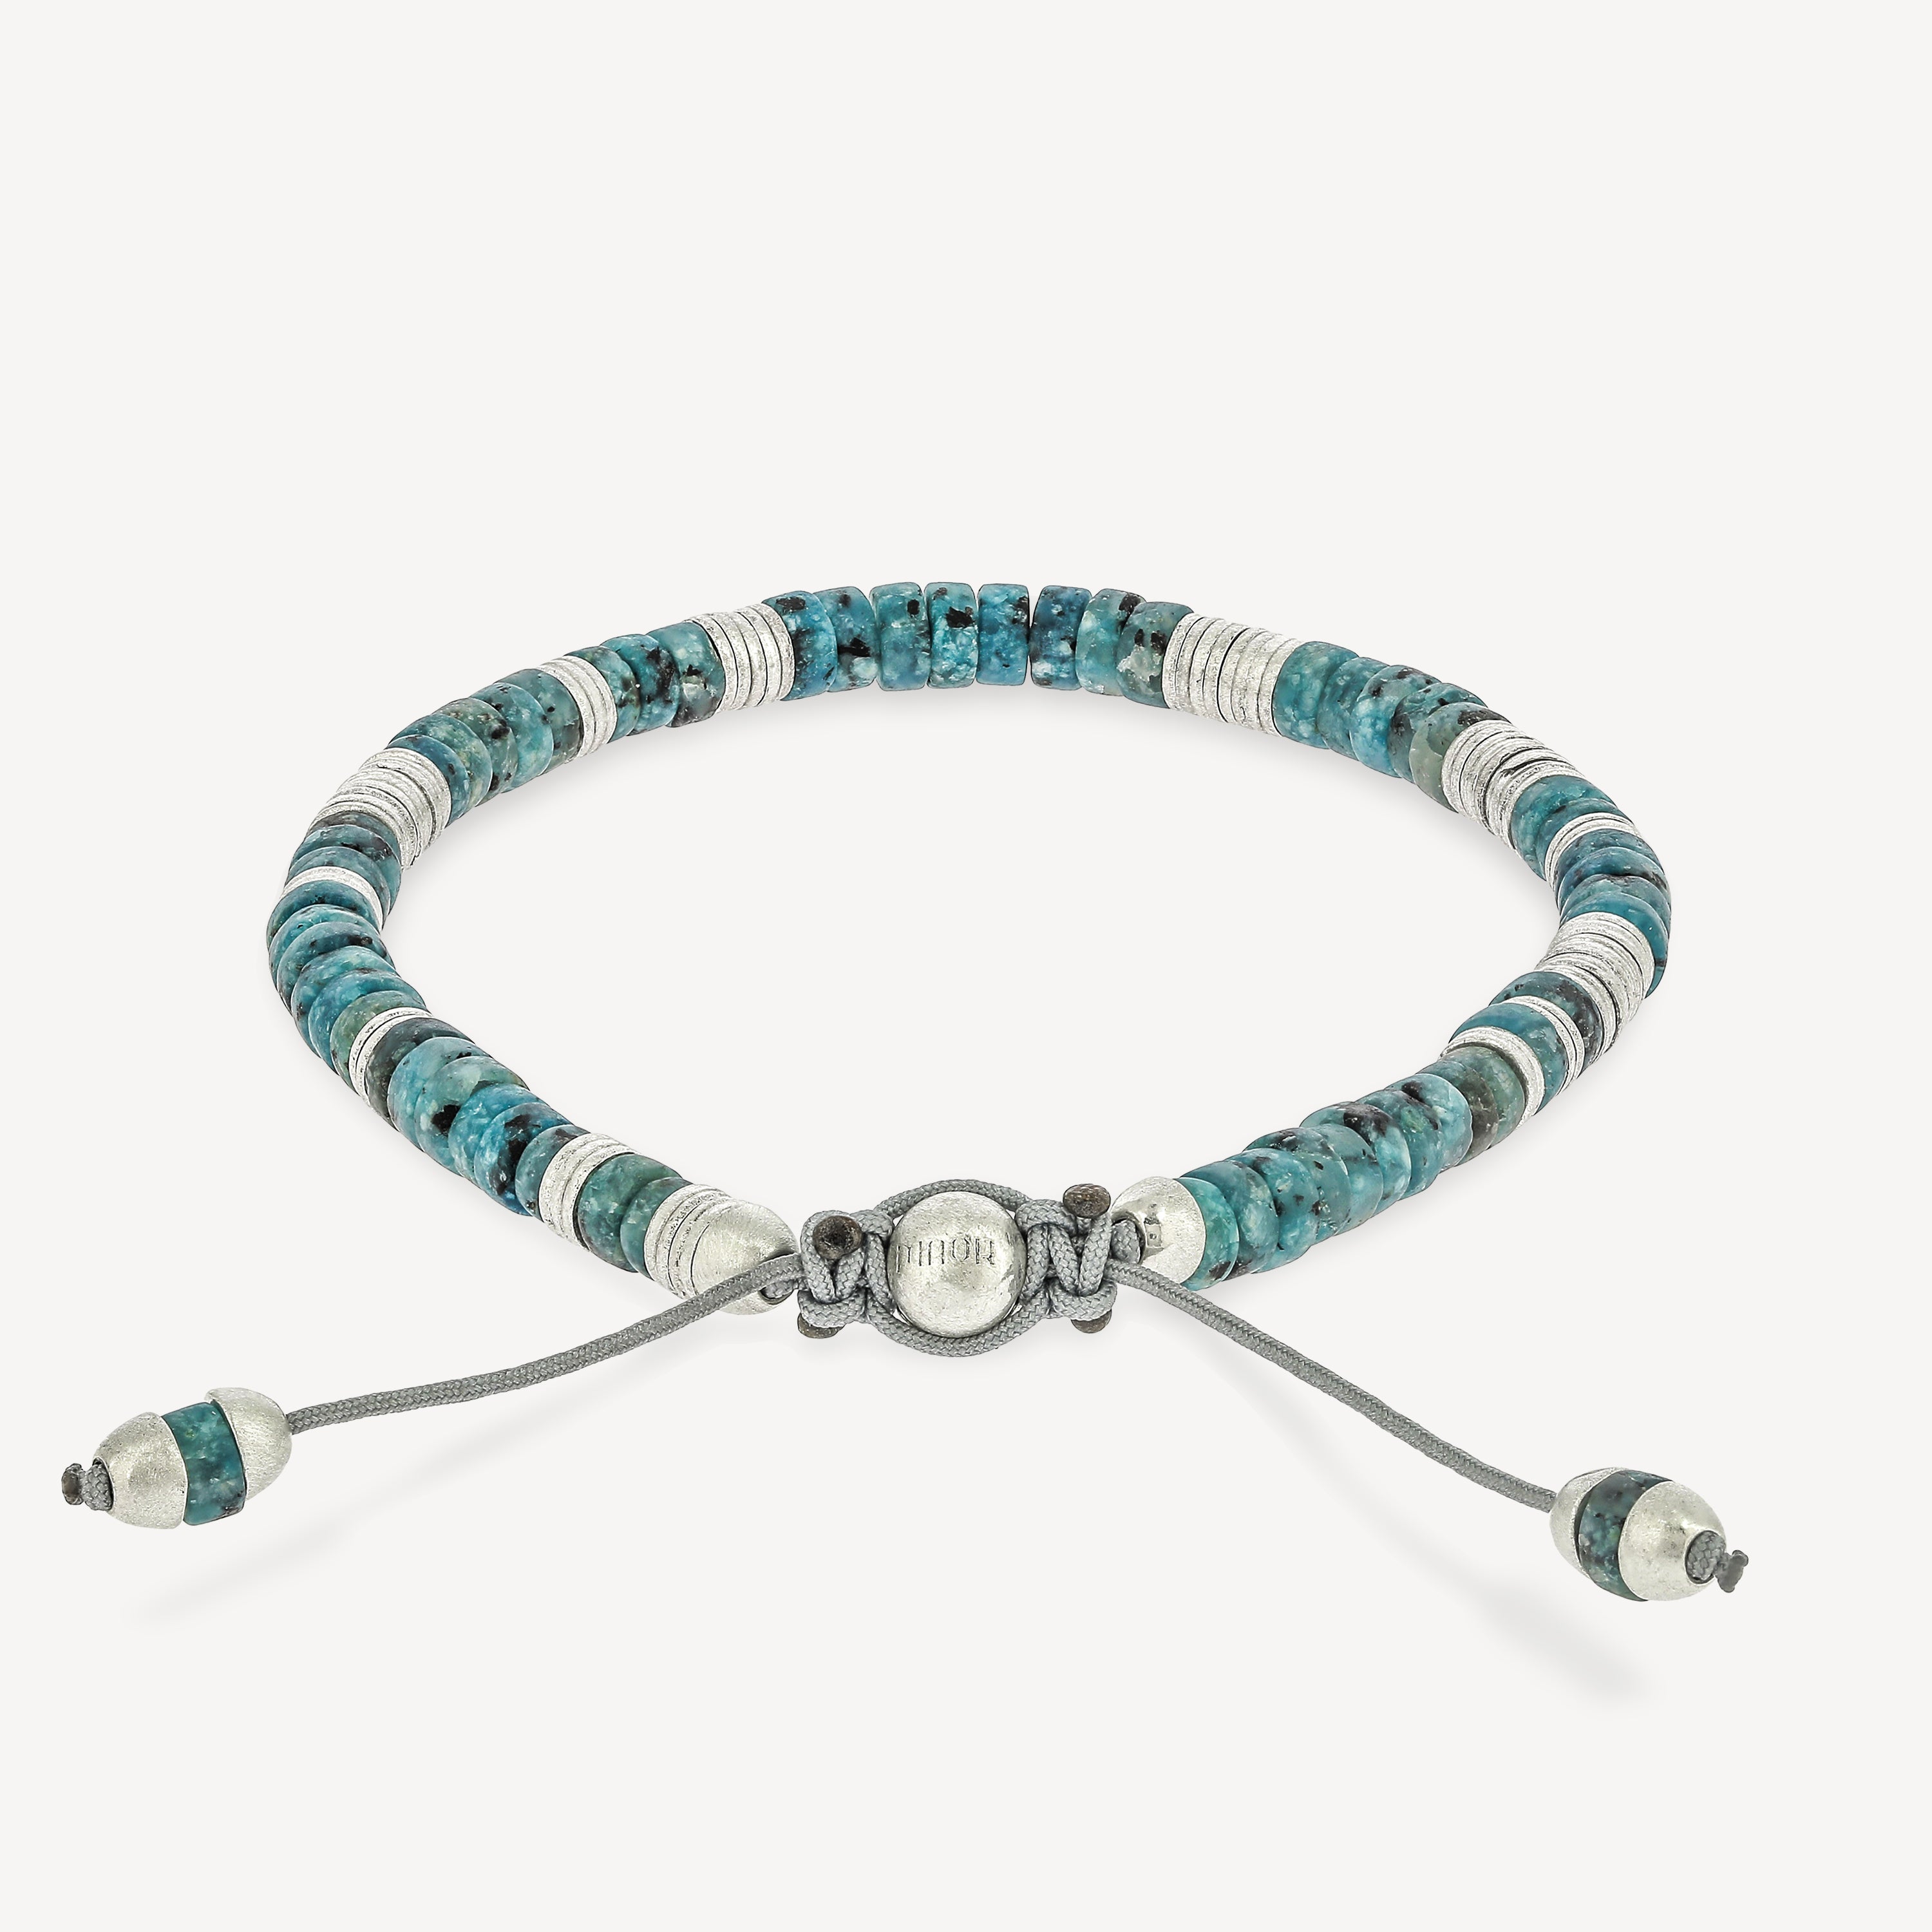 Lazuli-Armband, Silber, Türkis-Edelstein